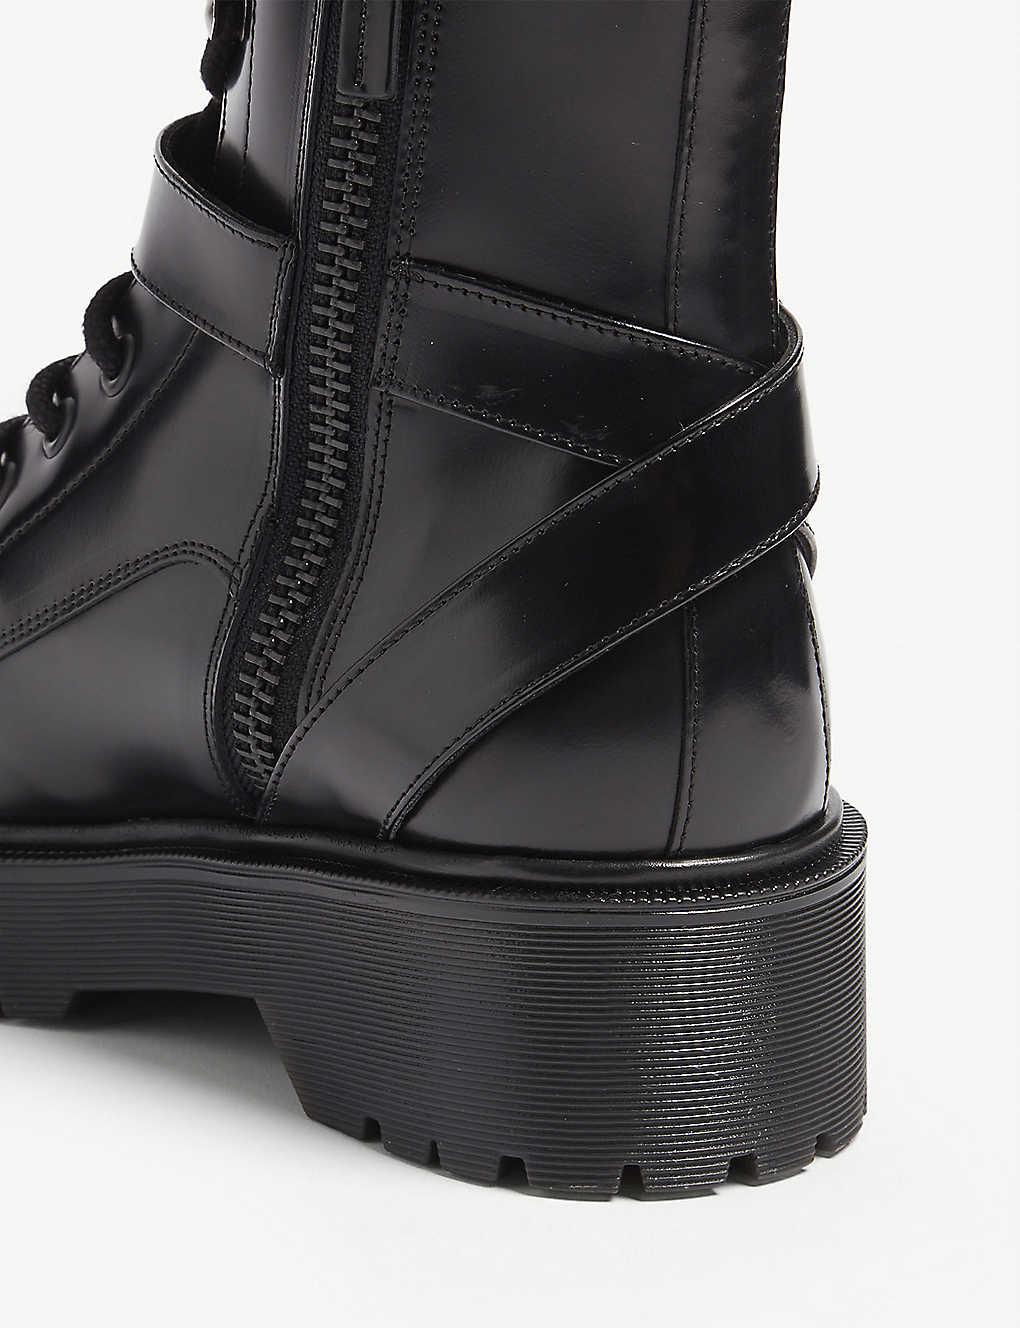 Maje Frankhook Leather Ankle Boots in Black | Lyst